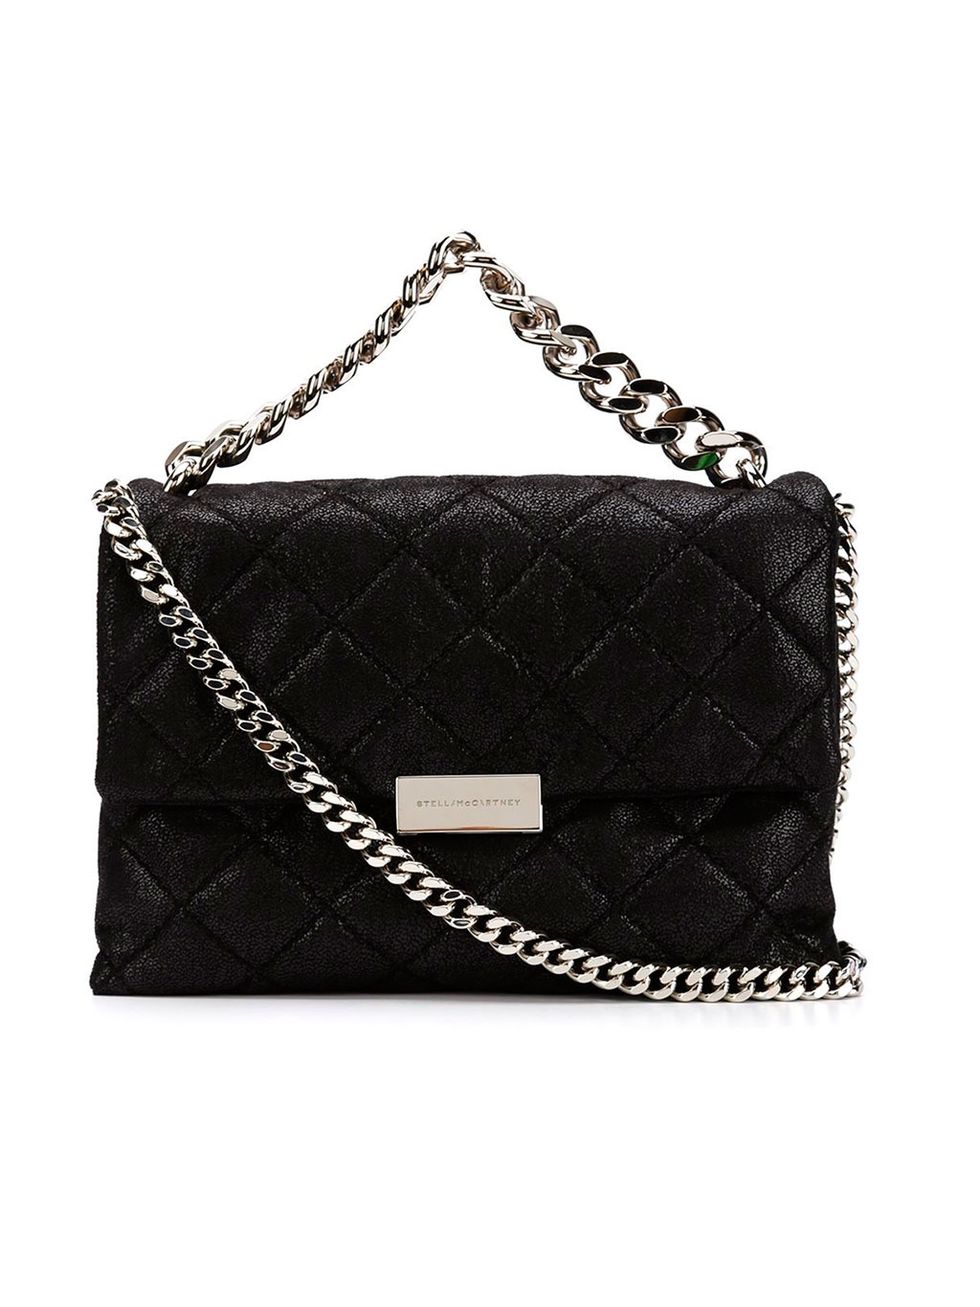 Handbag, Bag, Black, Fashion accessory, Leather, Shoulder bag, Chain, Silver, Material property, Strap, 